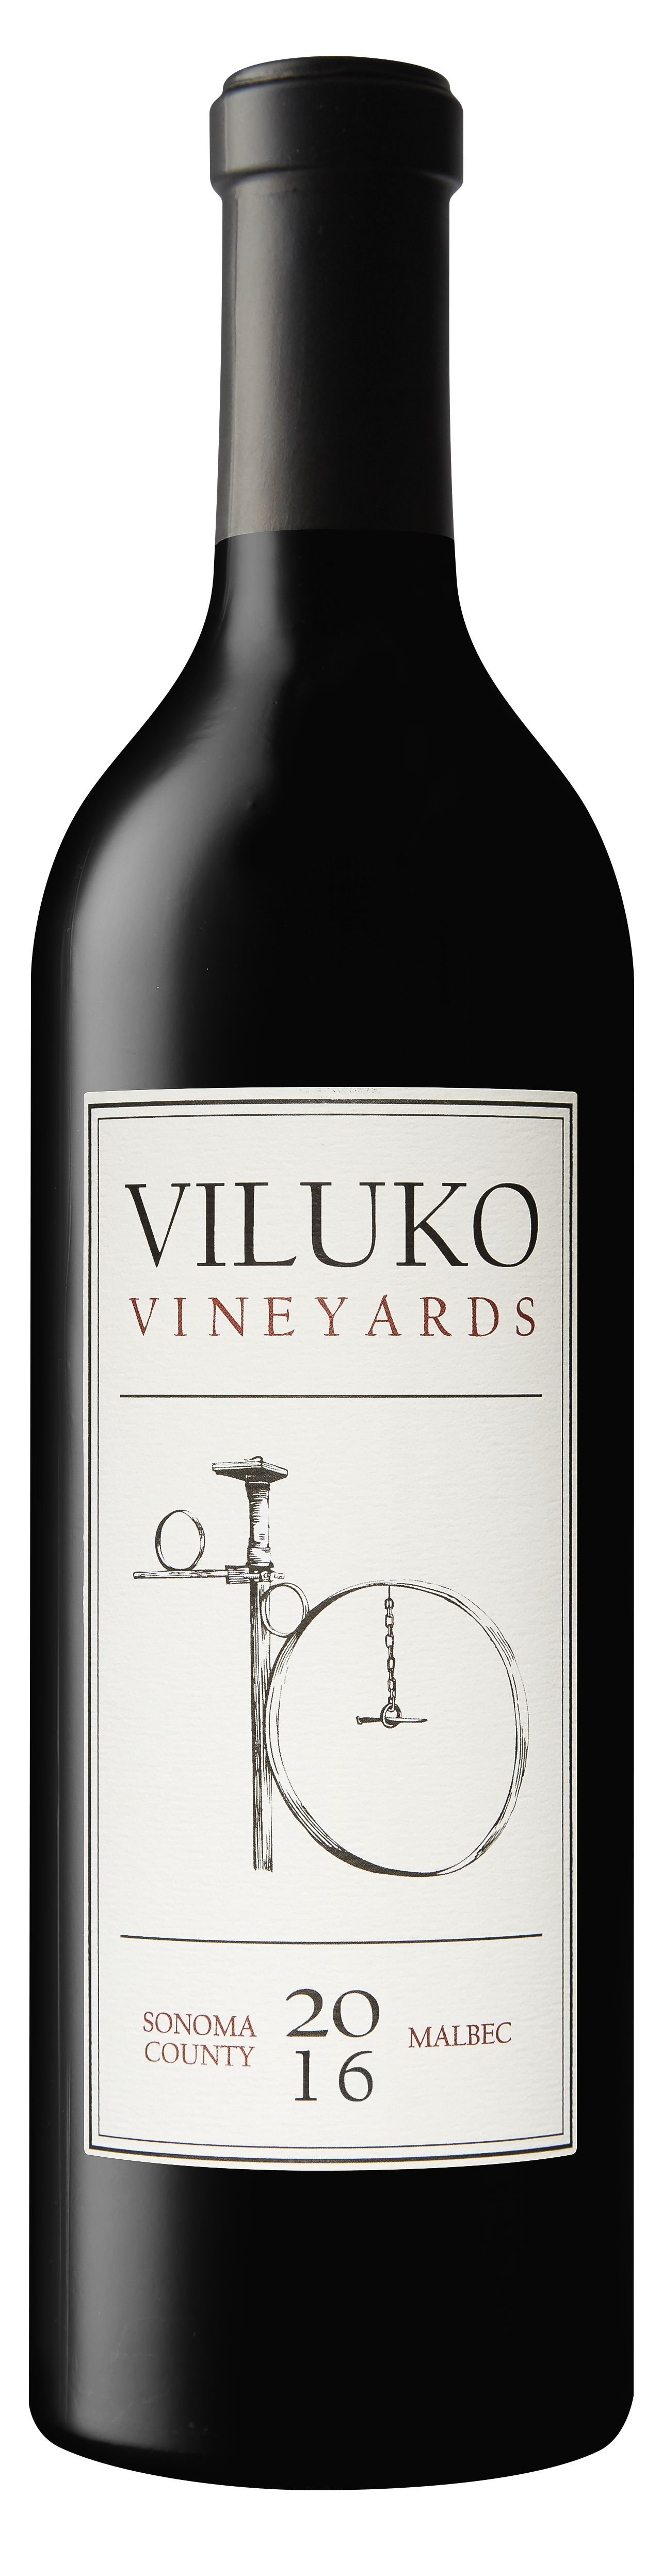 Product Image for 2016 Viluko Vineyards Malbec